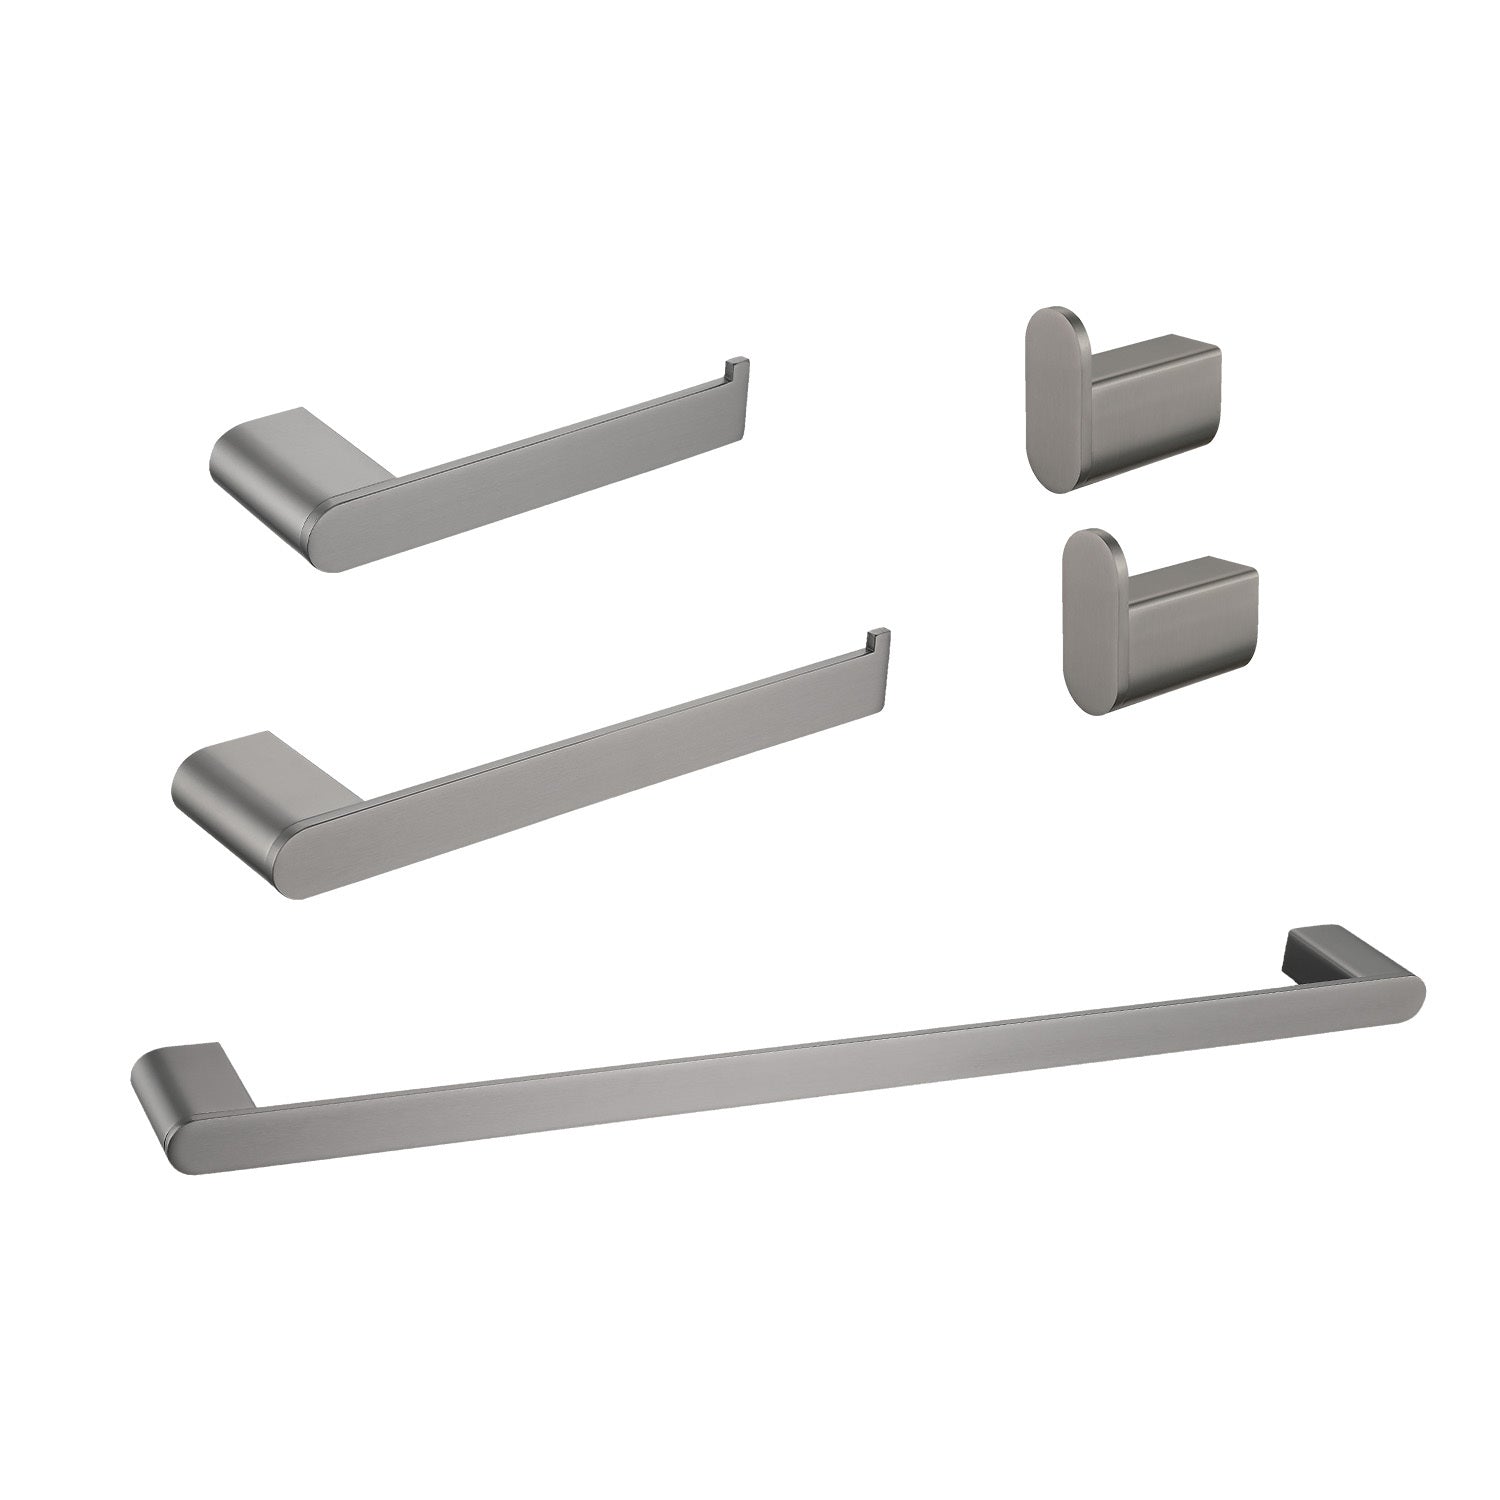 5 Piece Bathroom Hardware Set gunmetal-stainless steel